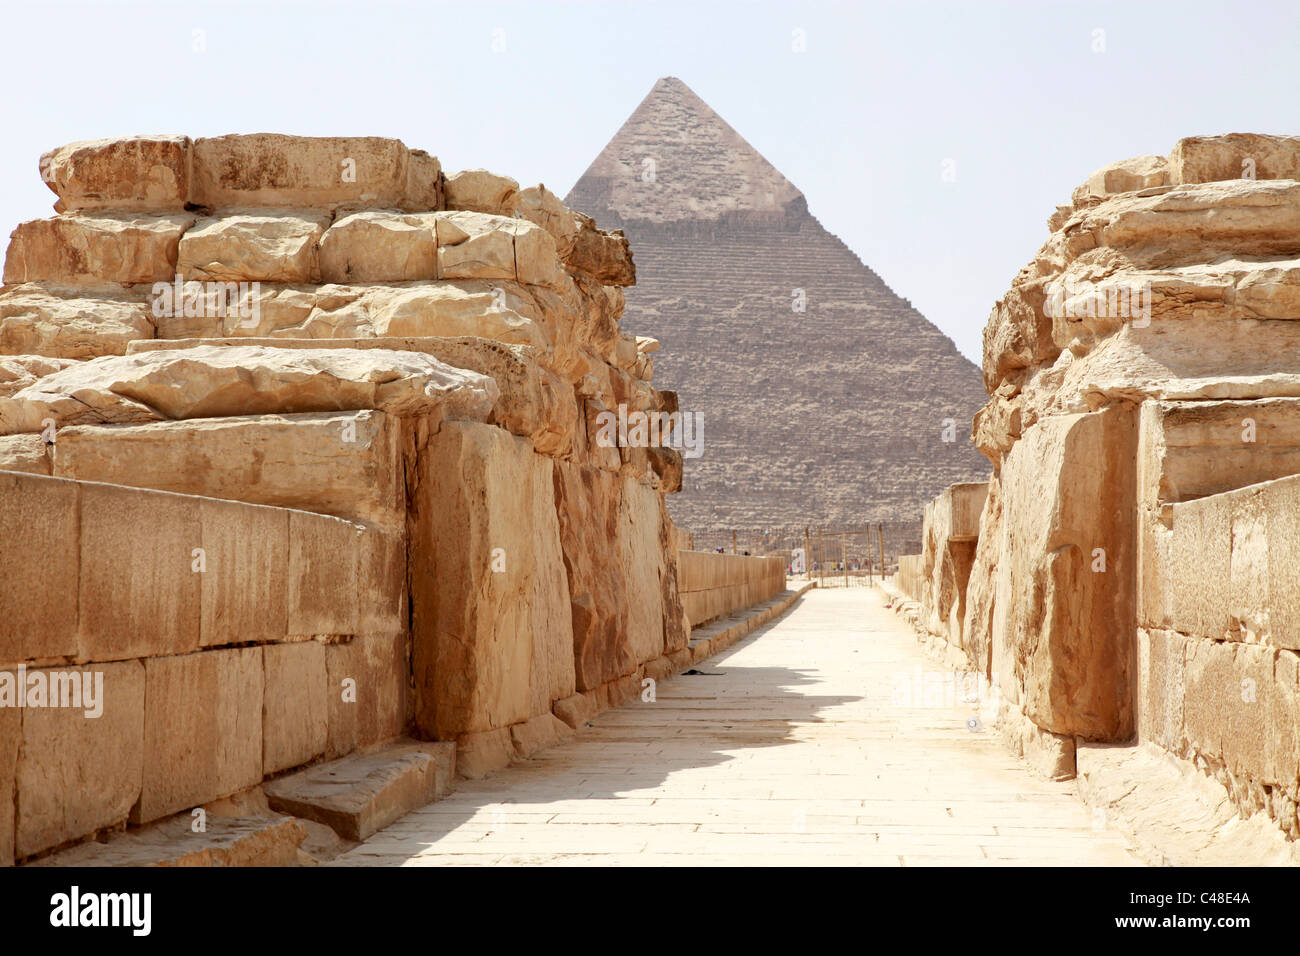 The pyramid of Khafre (Chephren), at the Pyramids of Giza, Cairo, Egypt Stock Photo